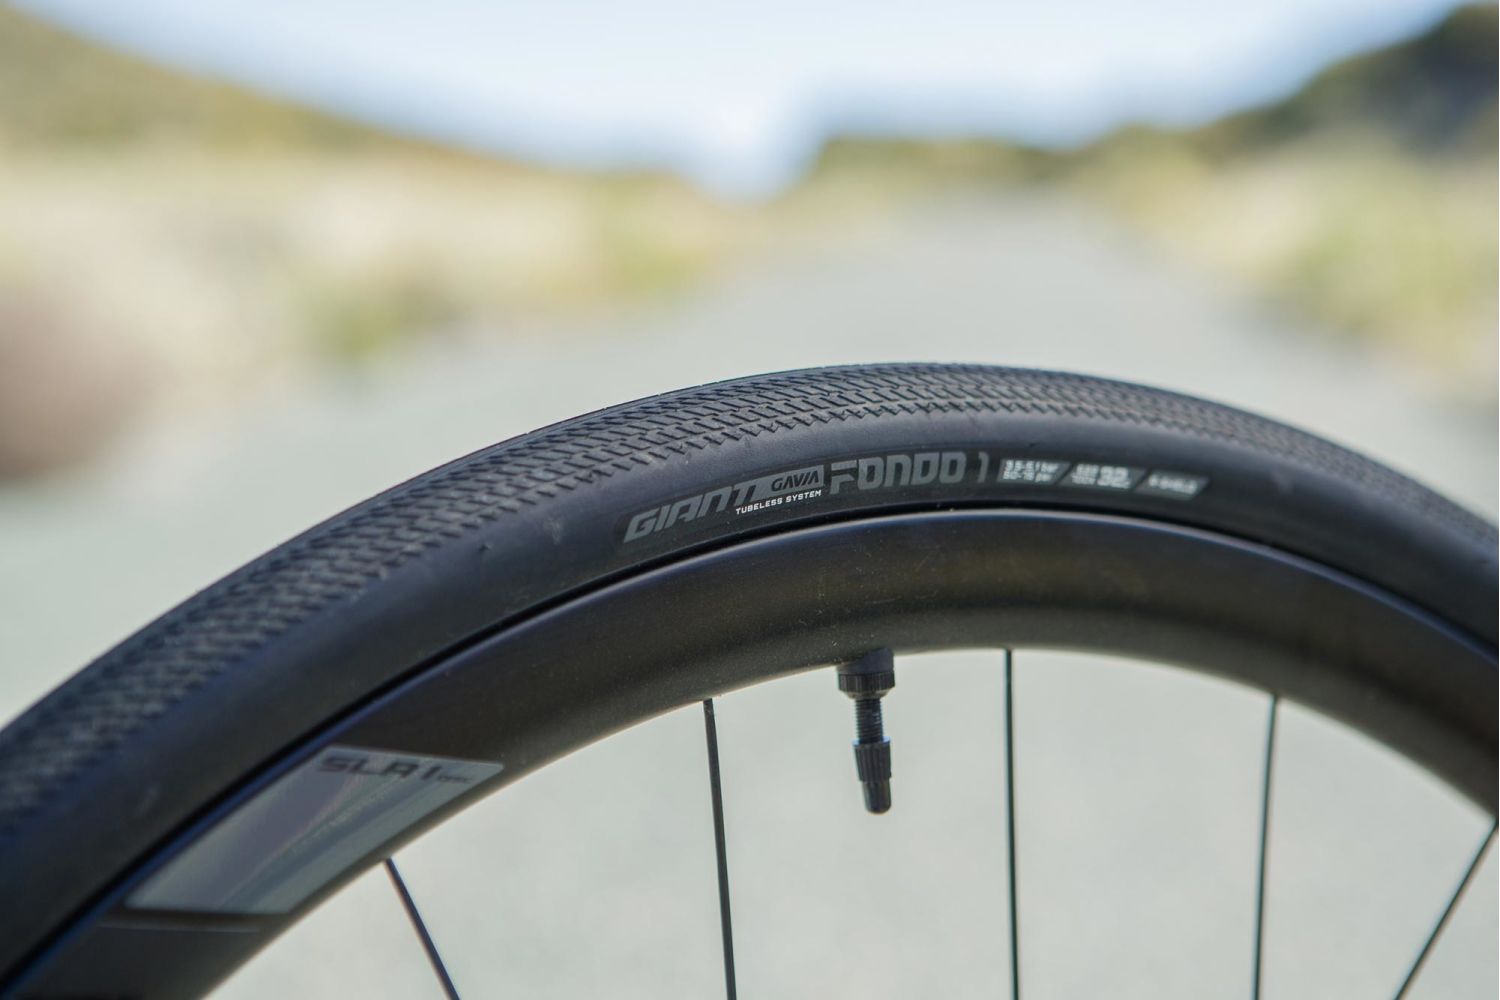 700x32 tubeless tires